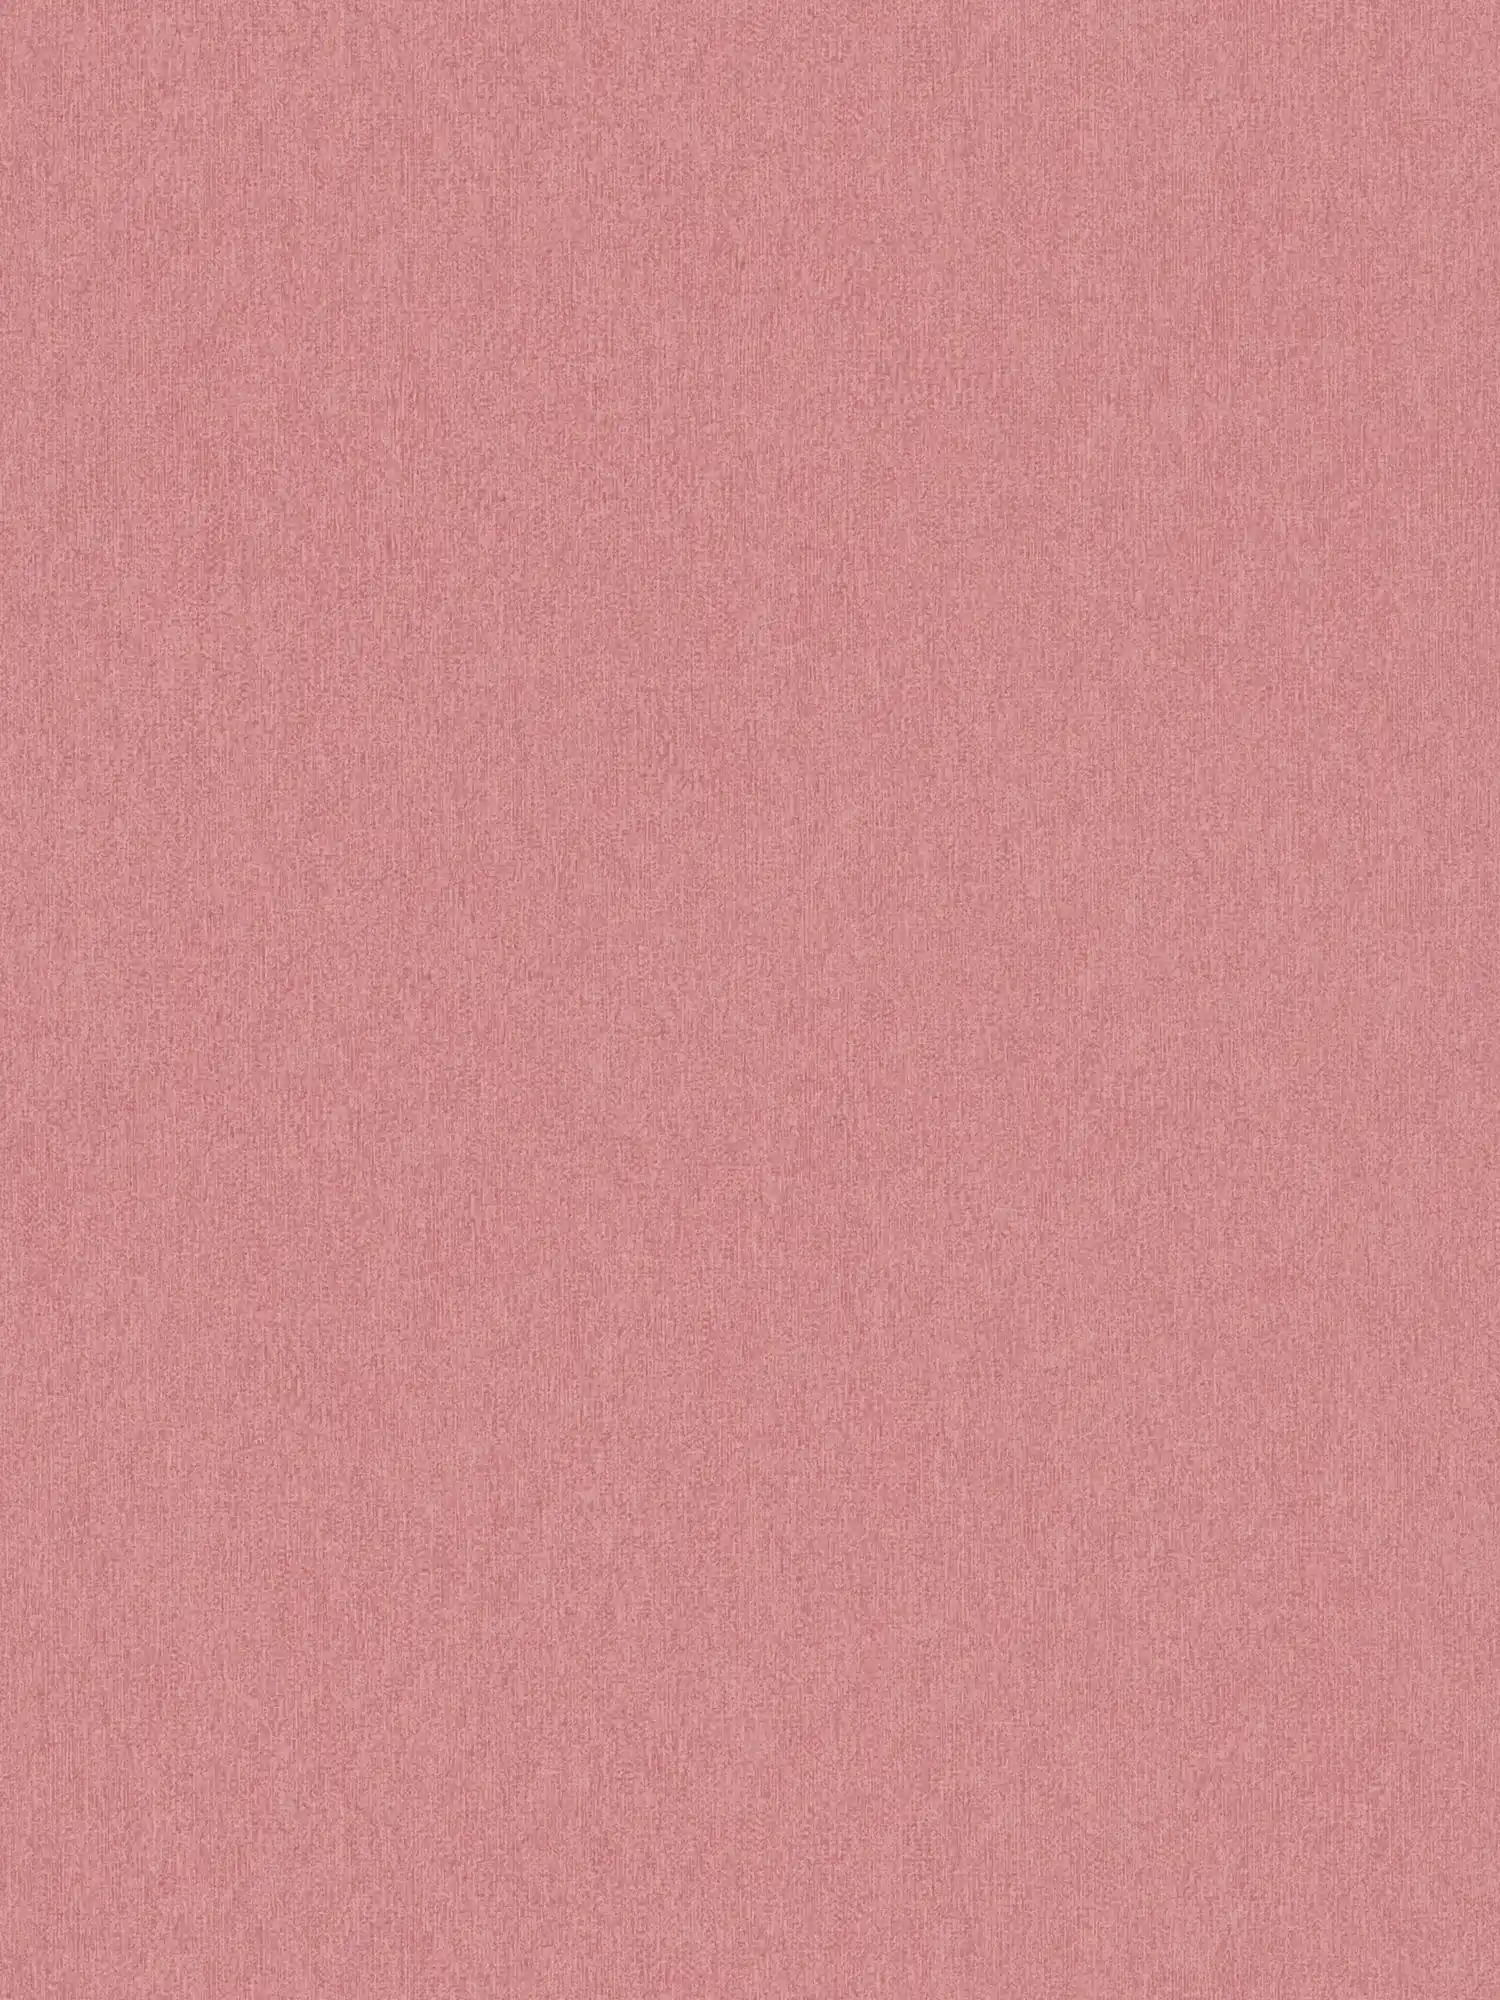 Carta da parati in tessuto non tessuto liscia e opaca con motivo a struttura - rosa
